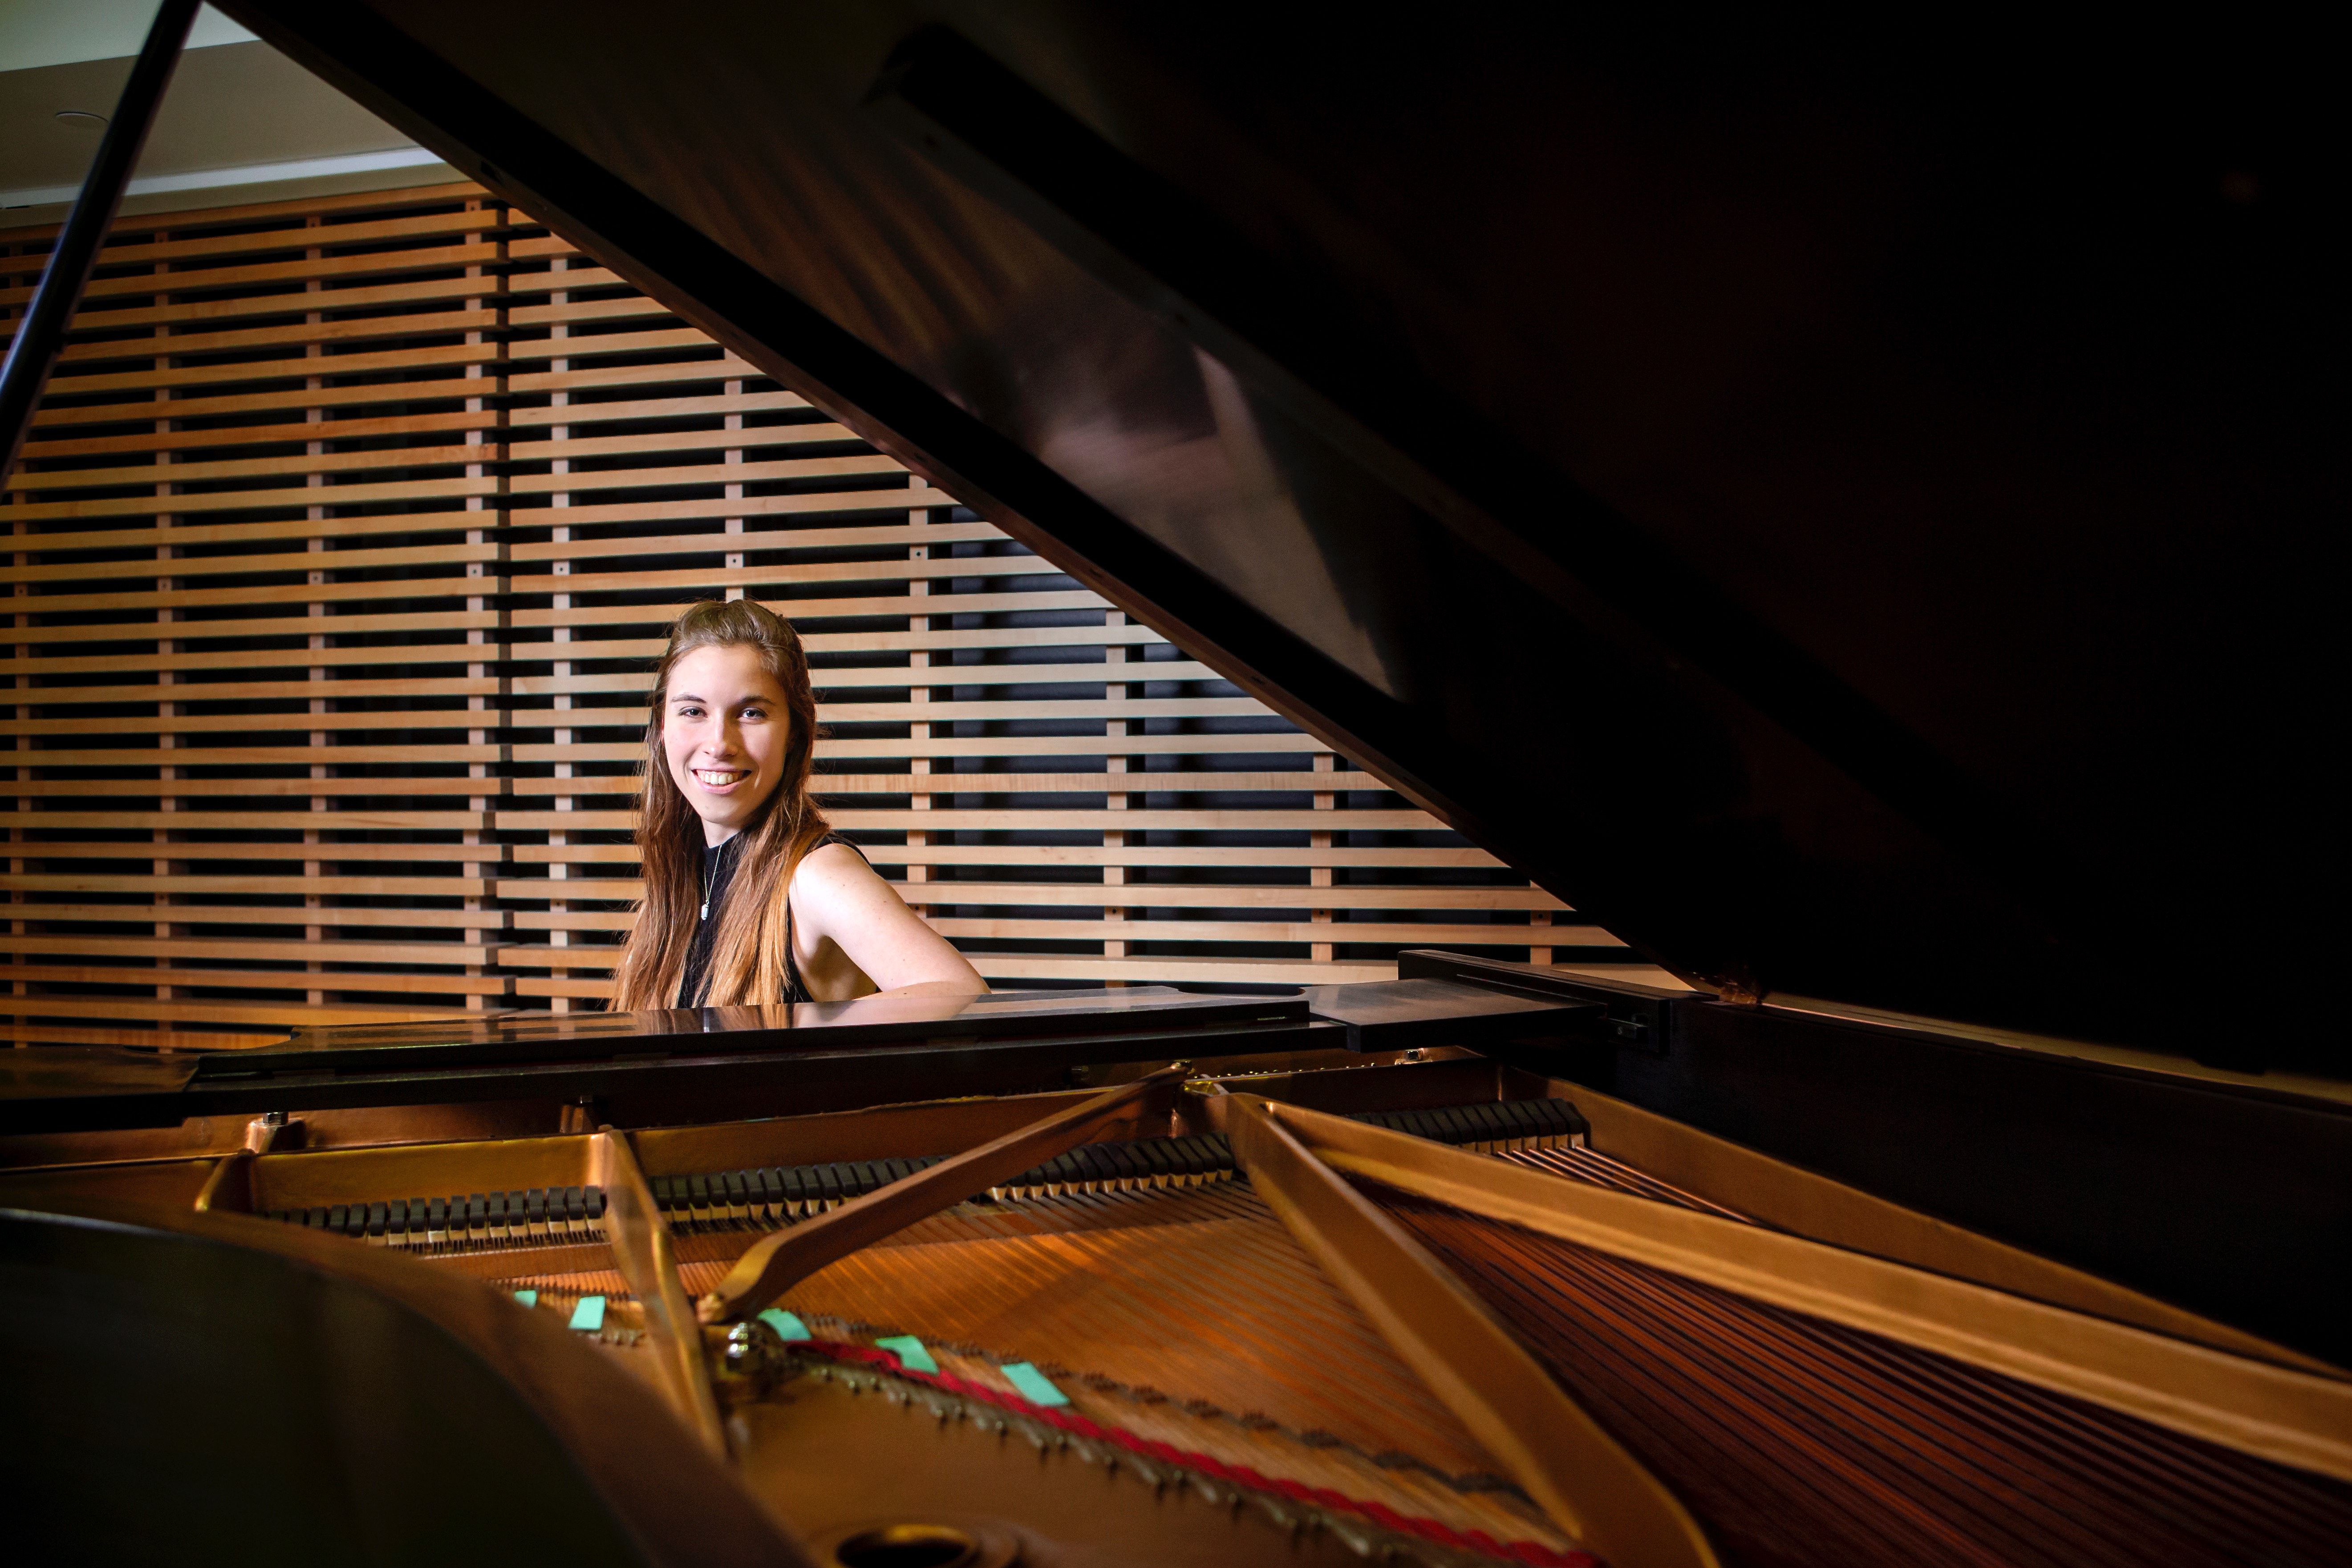 LSU student Katie Vukovics smiles while sitting at a piano.